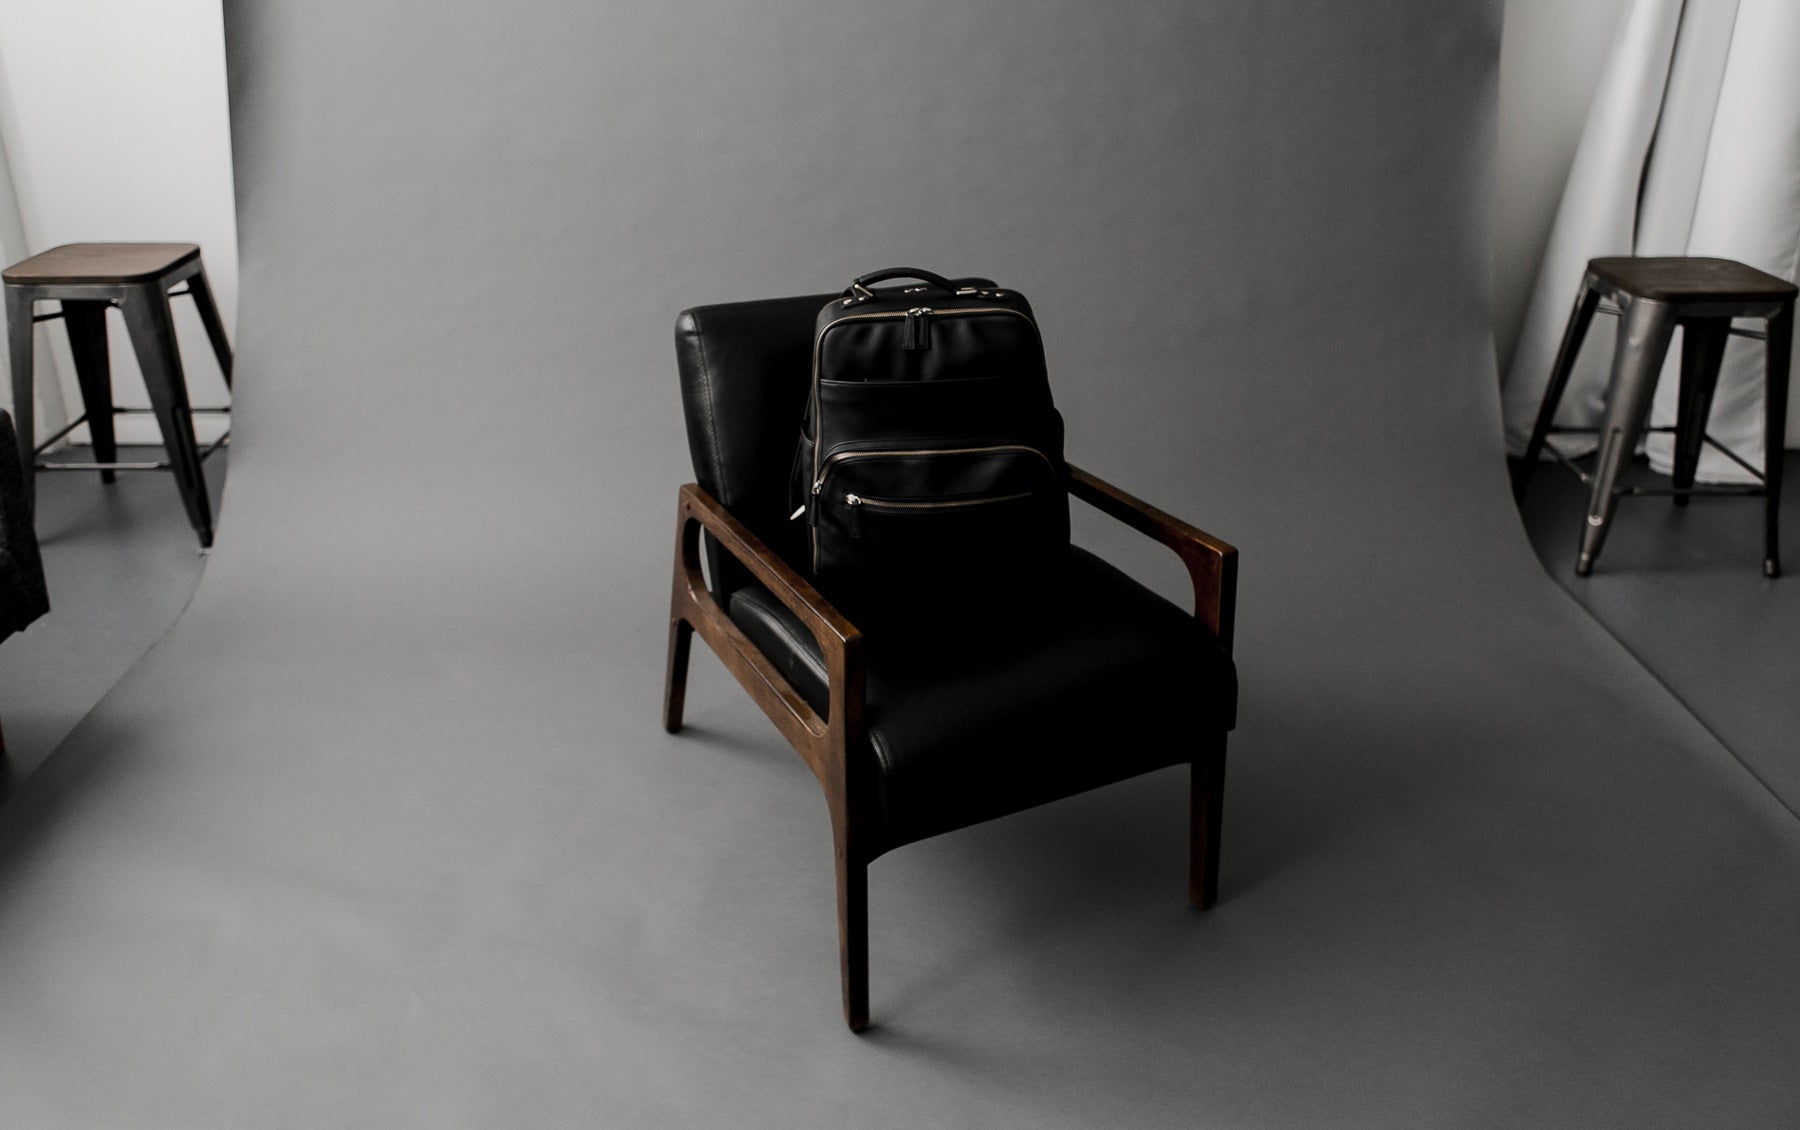 Black Camera Bag on Chair